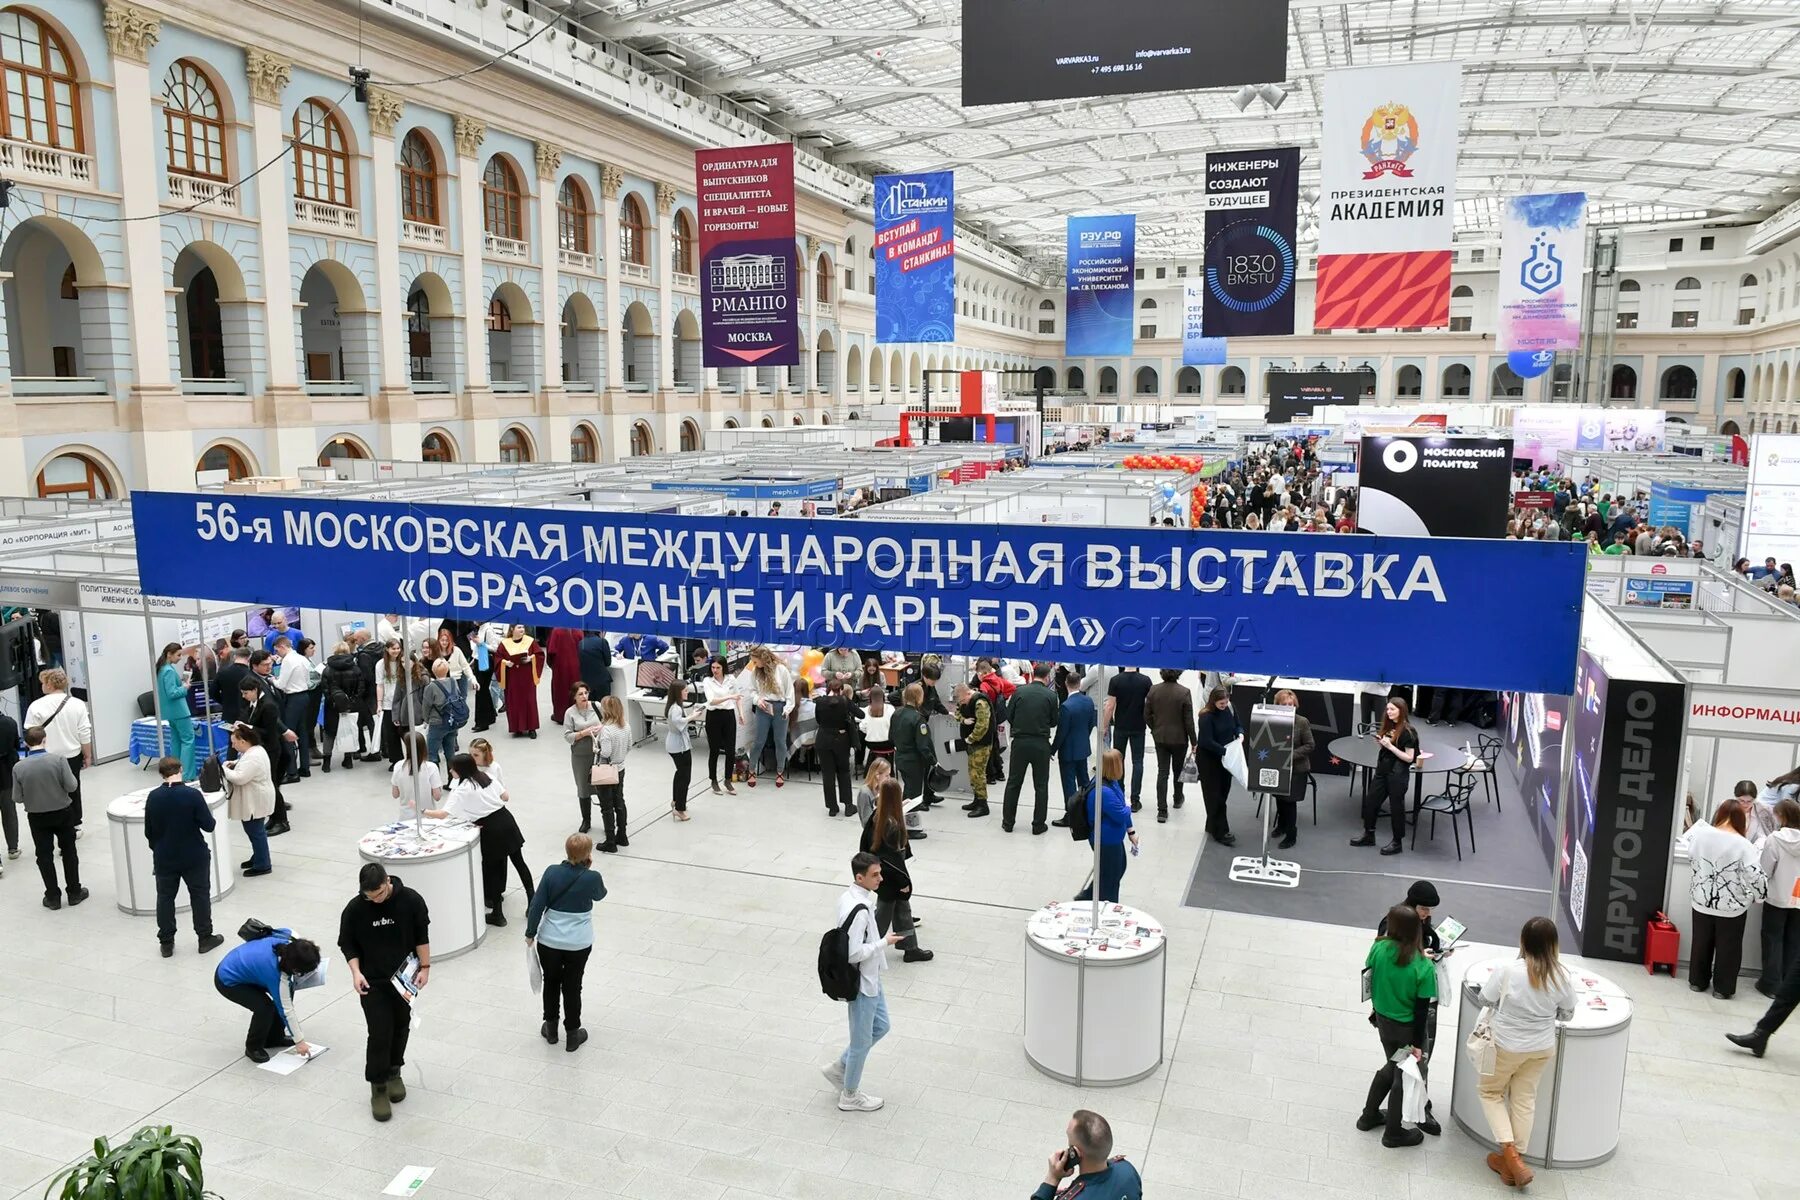 58 московская международная выставка